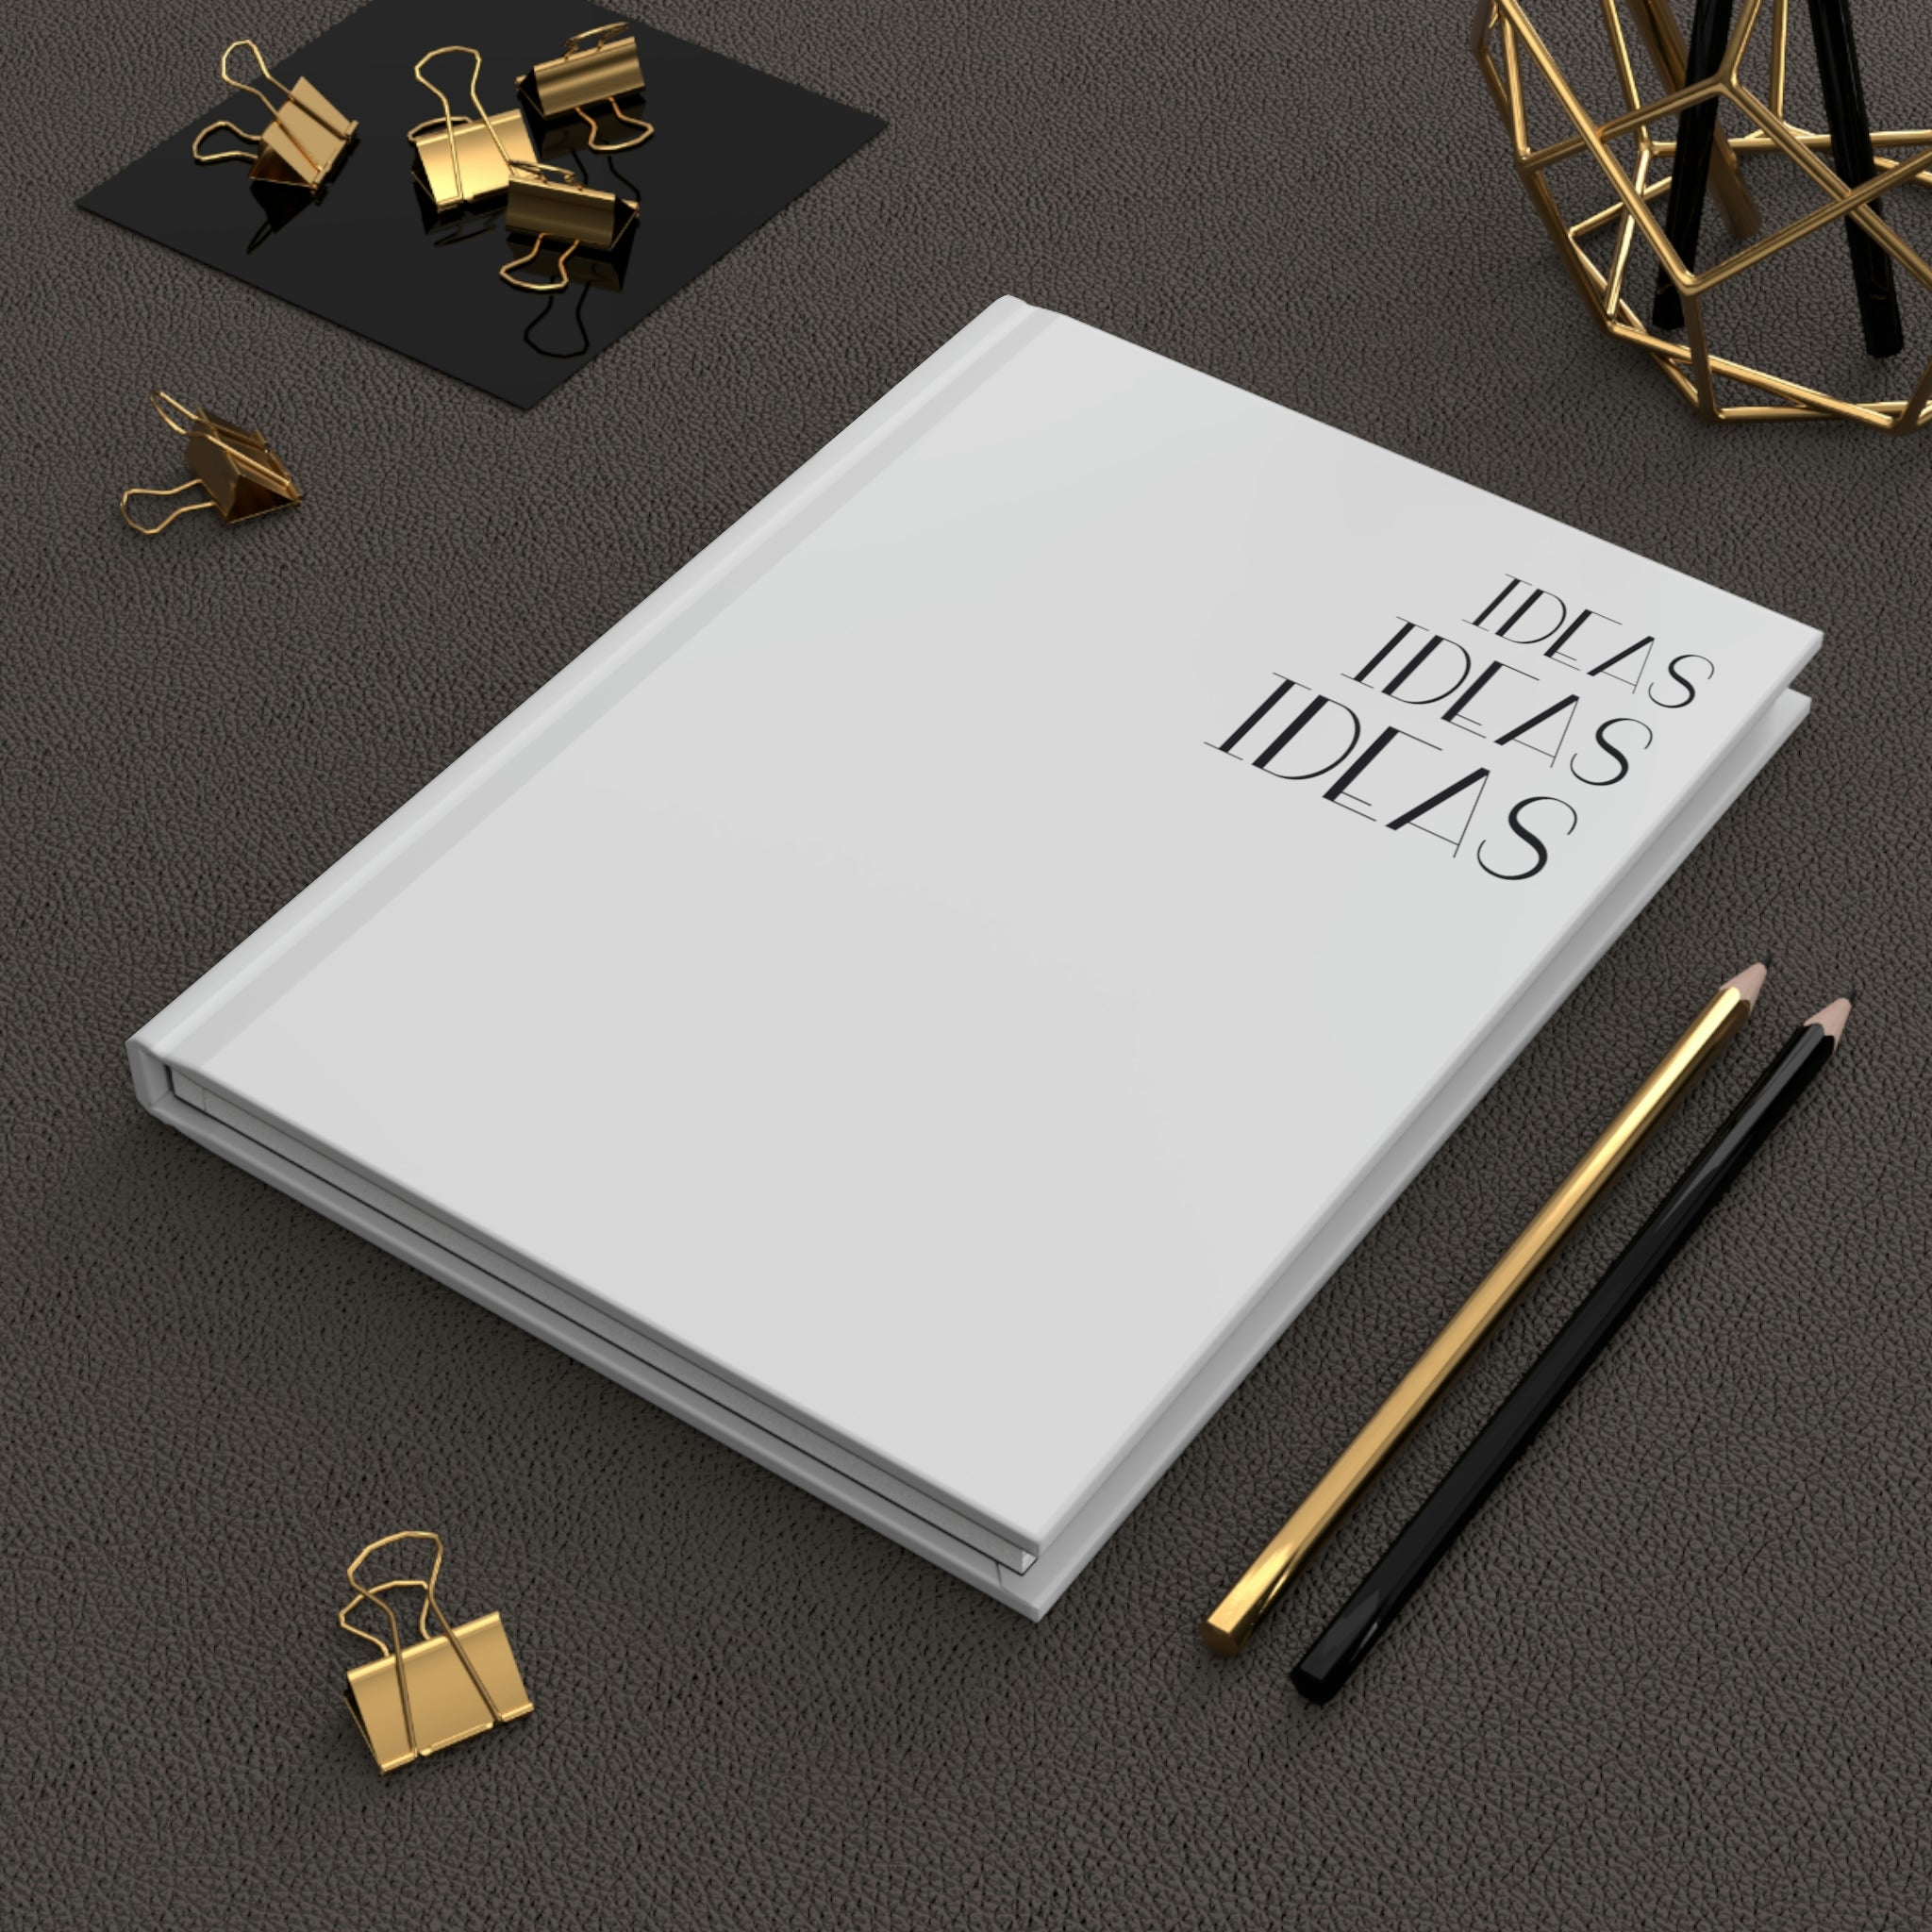 Ideas Hardcover Journal